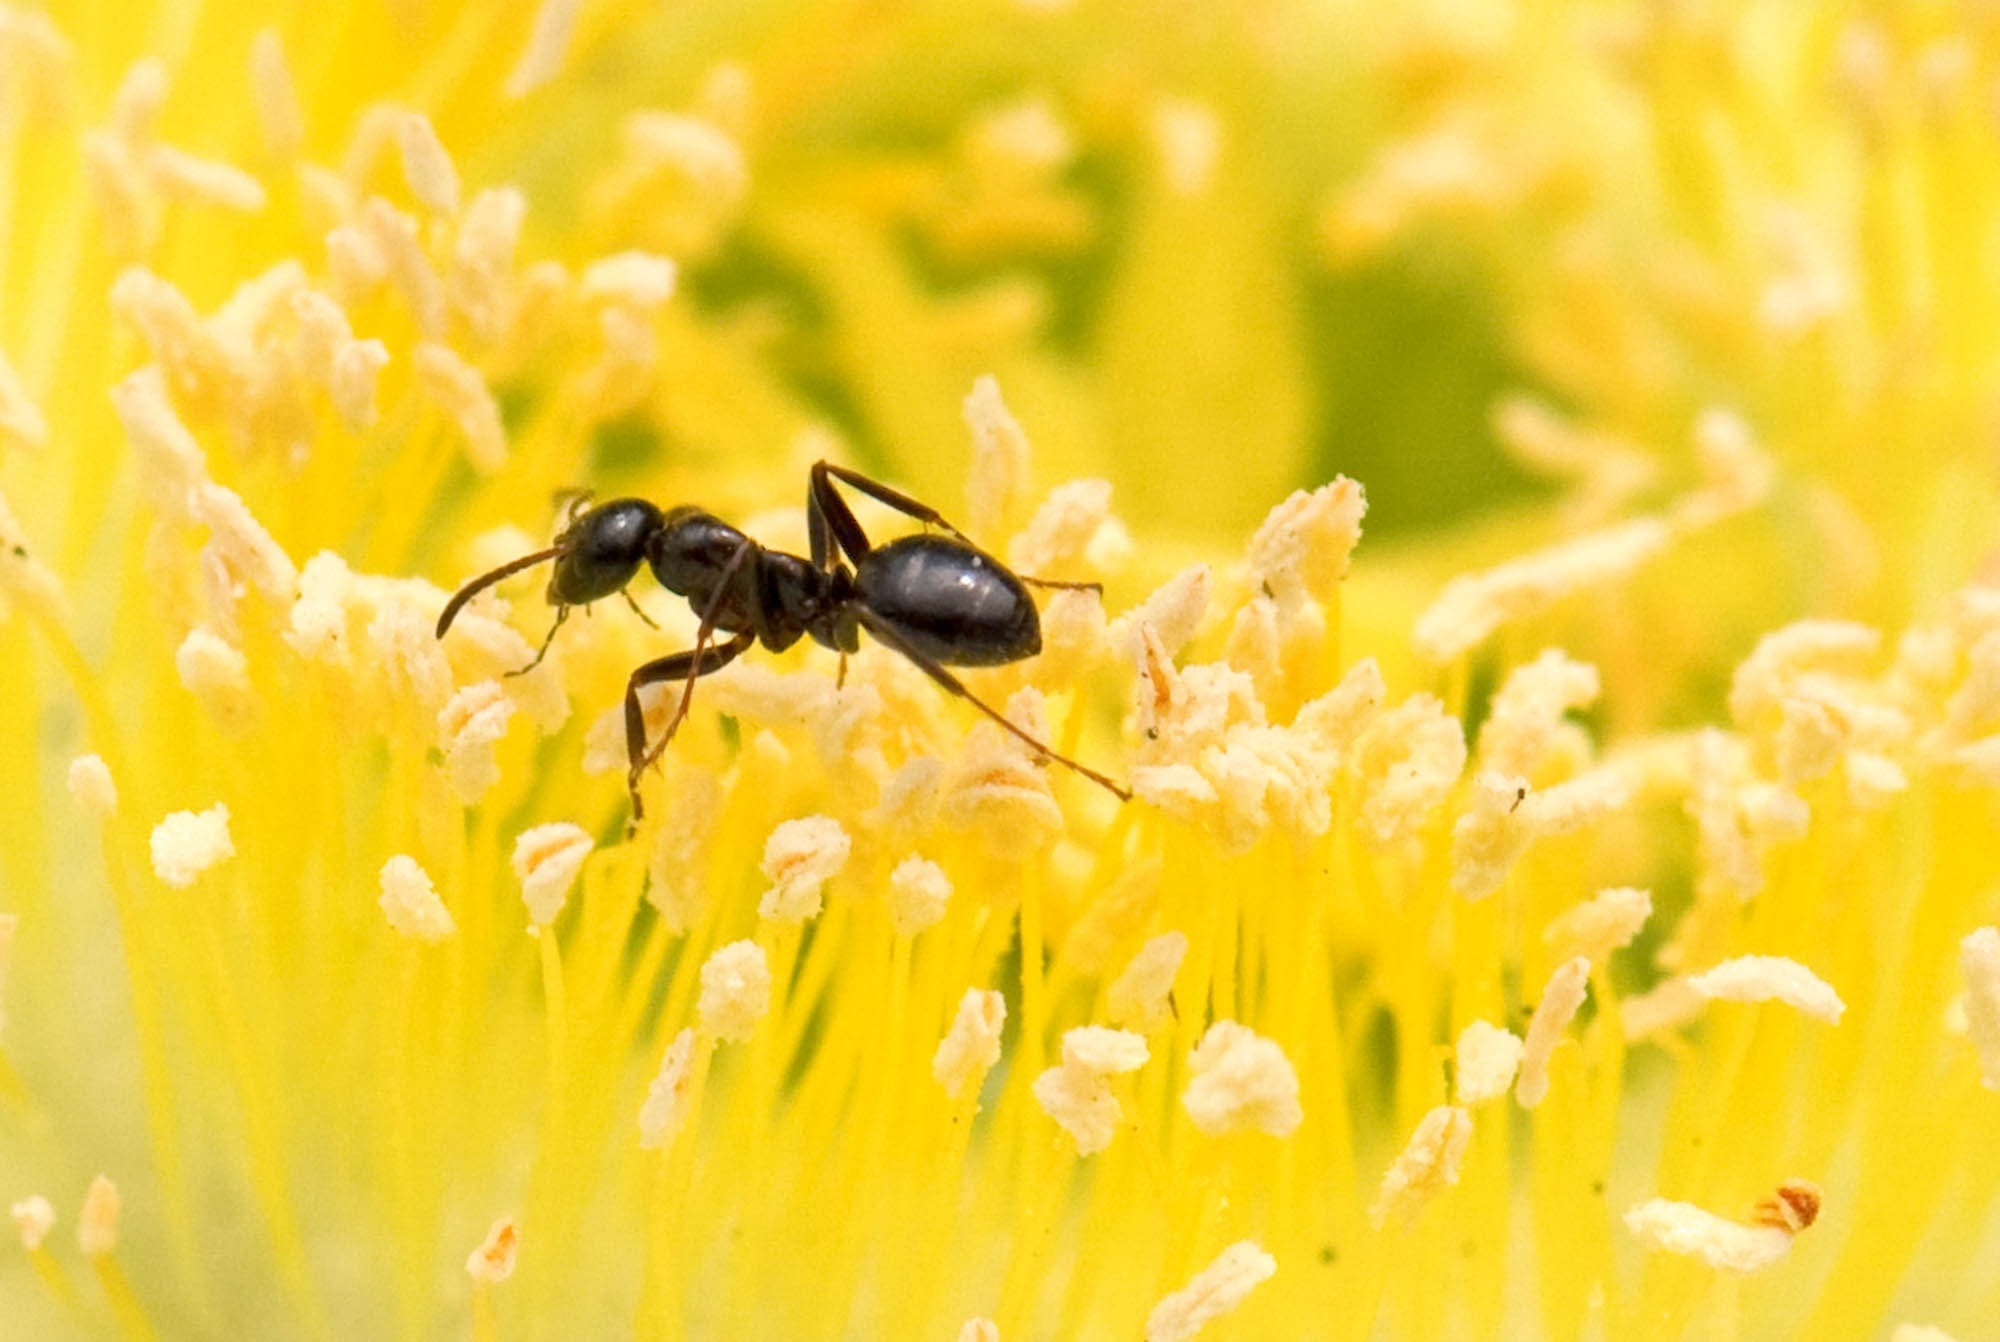 garden ant on yellow flower stigma closeup phot